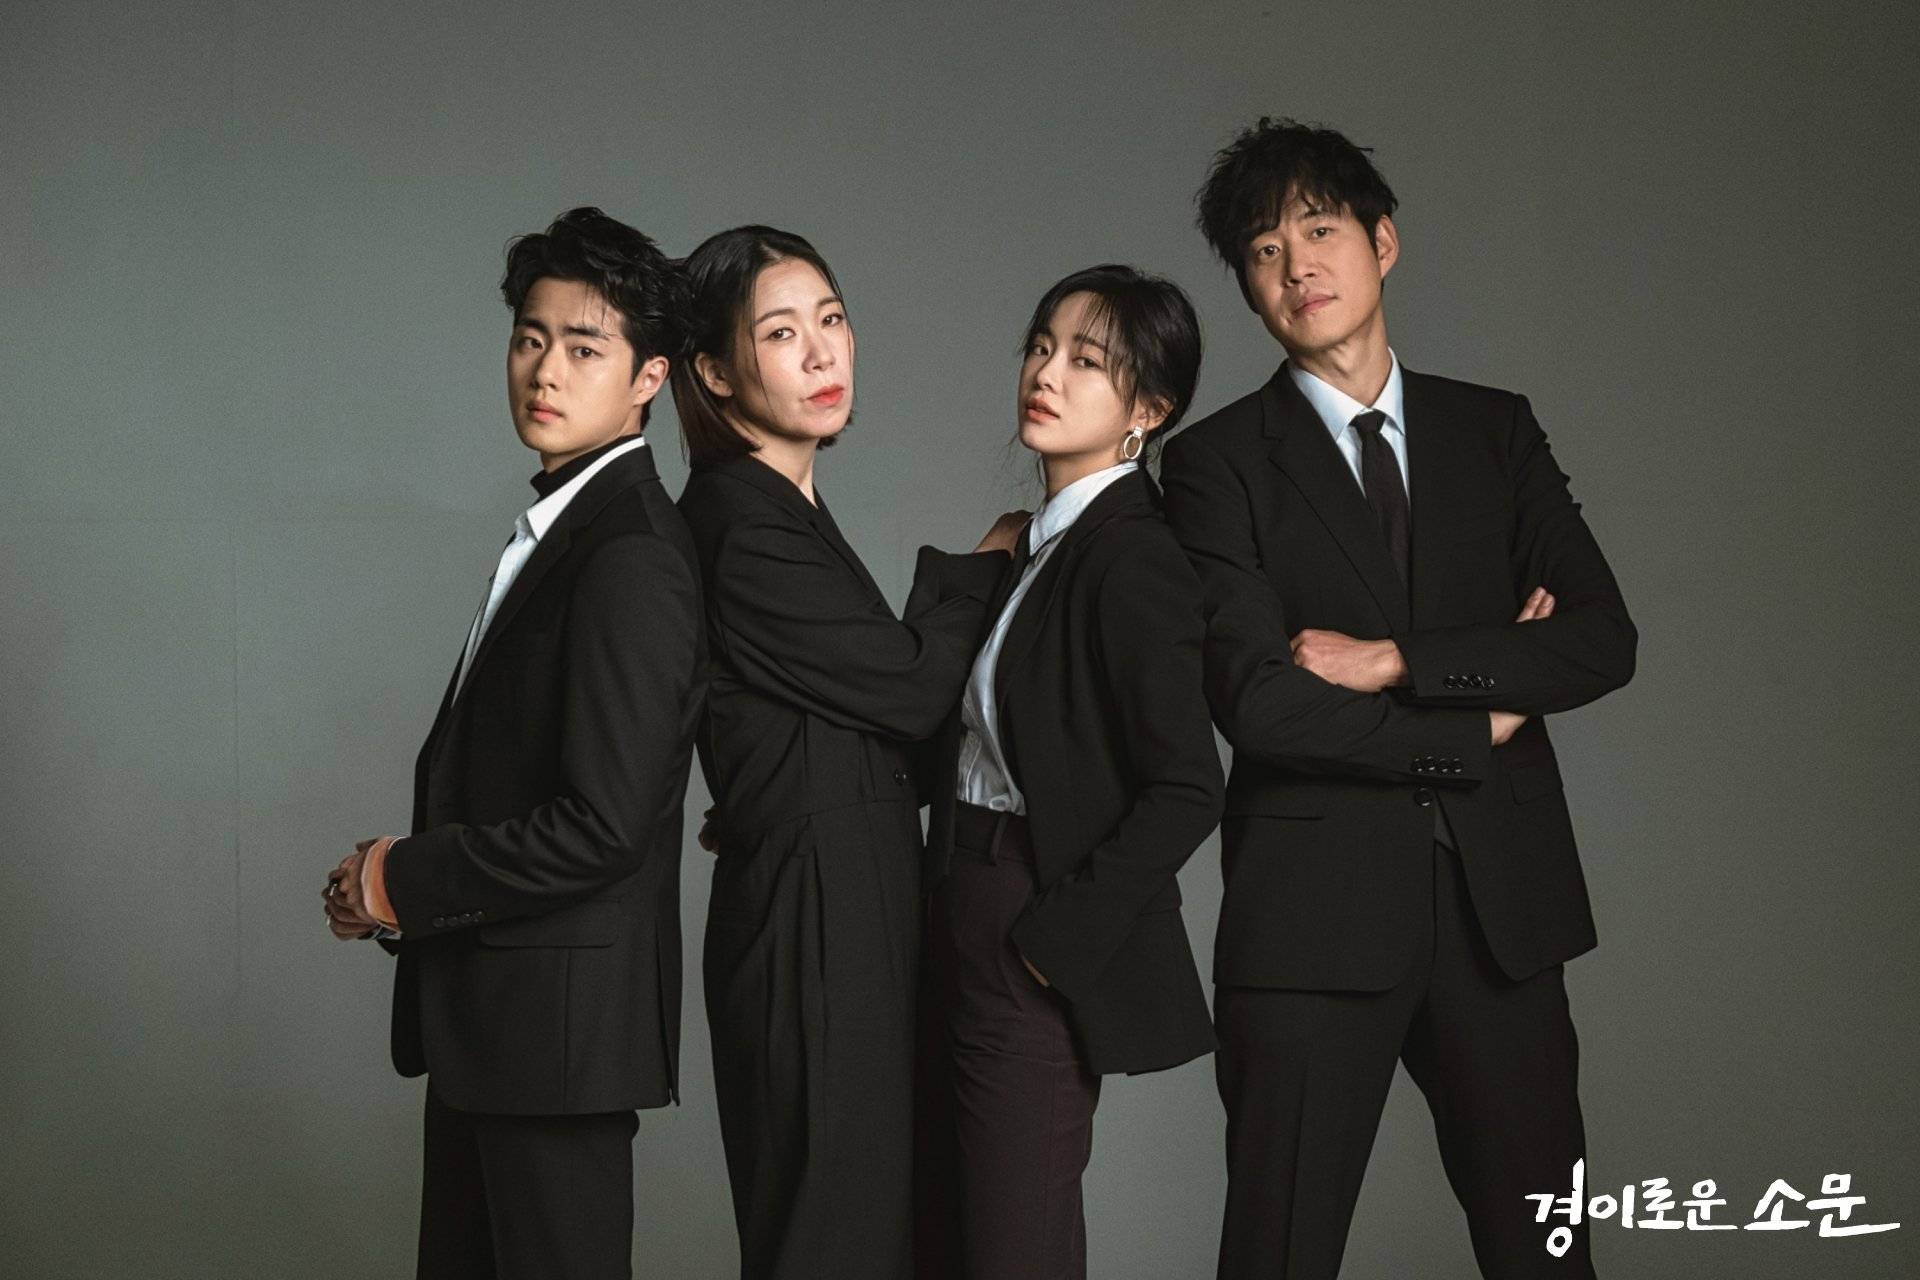 Photos Cast Photoshoot Added For The Korean Drama The Uncanny Counter Hancinema 0031